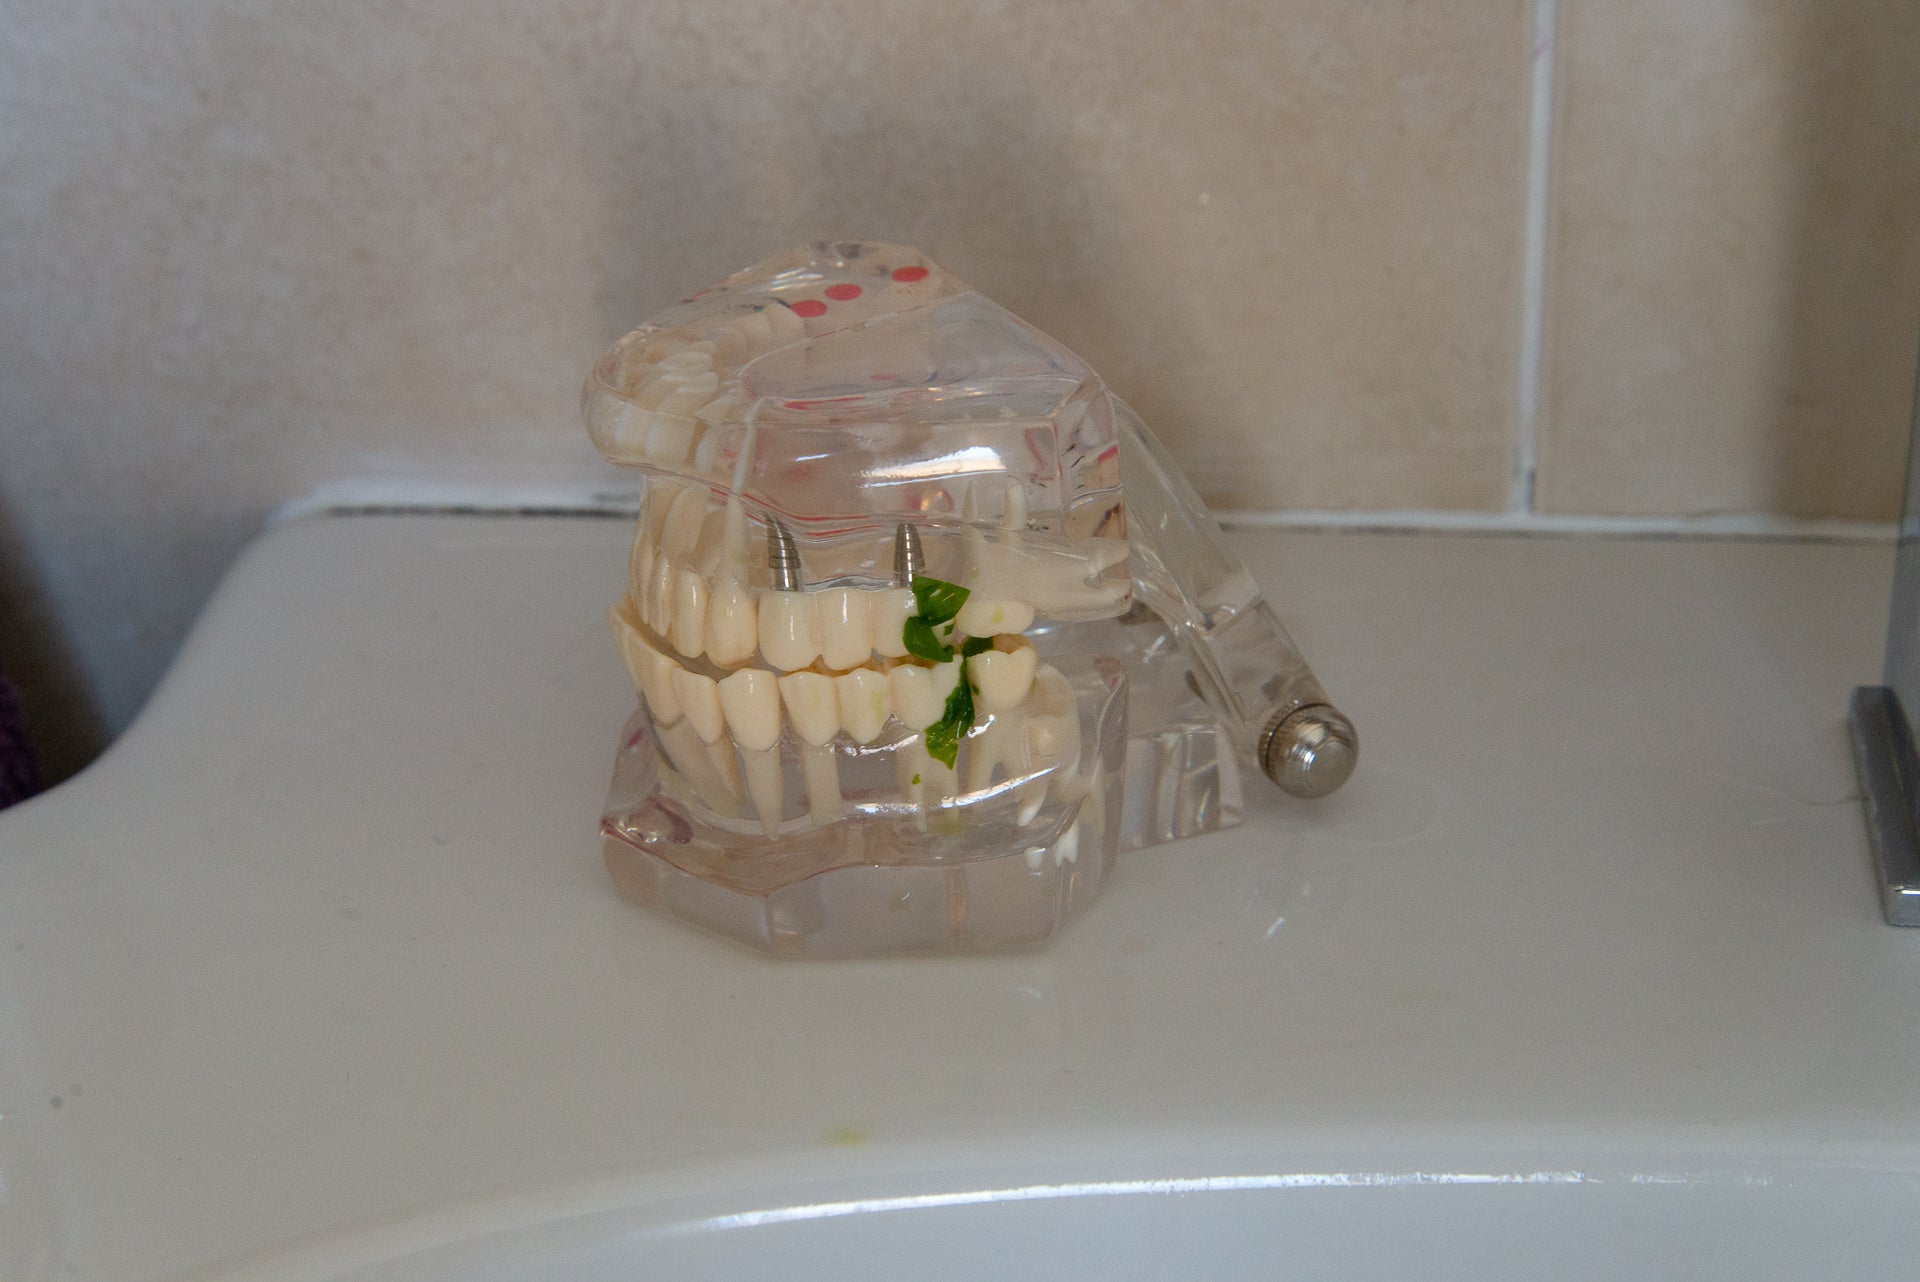 Oral-B Genius 9000 test teeth with spinach